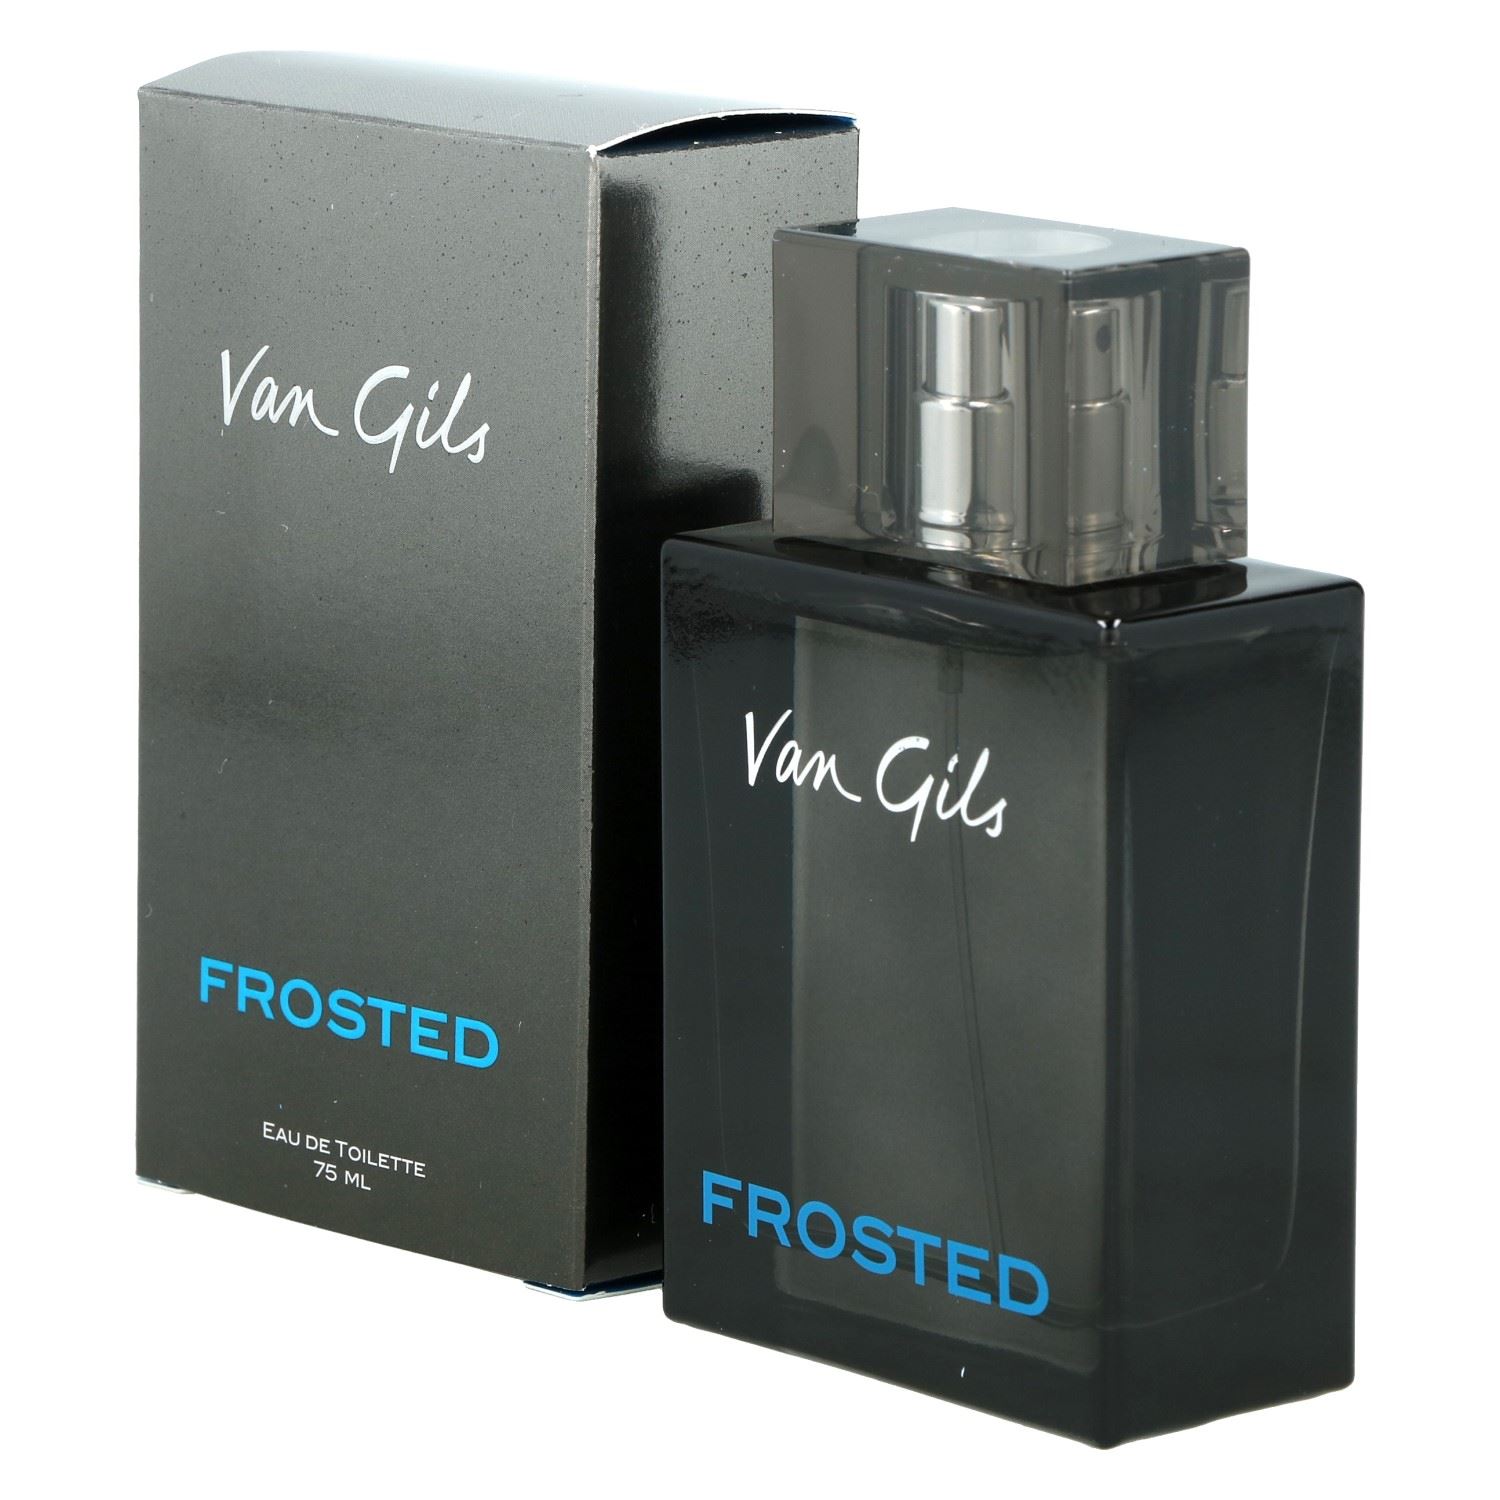 Van Gils - Frosted - eau de toilette spray 75 ml